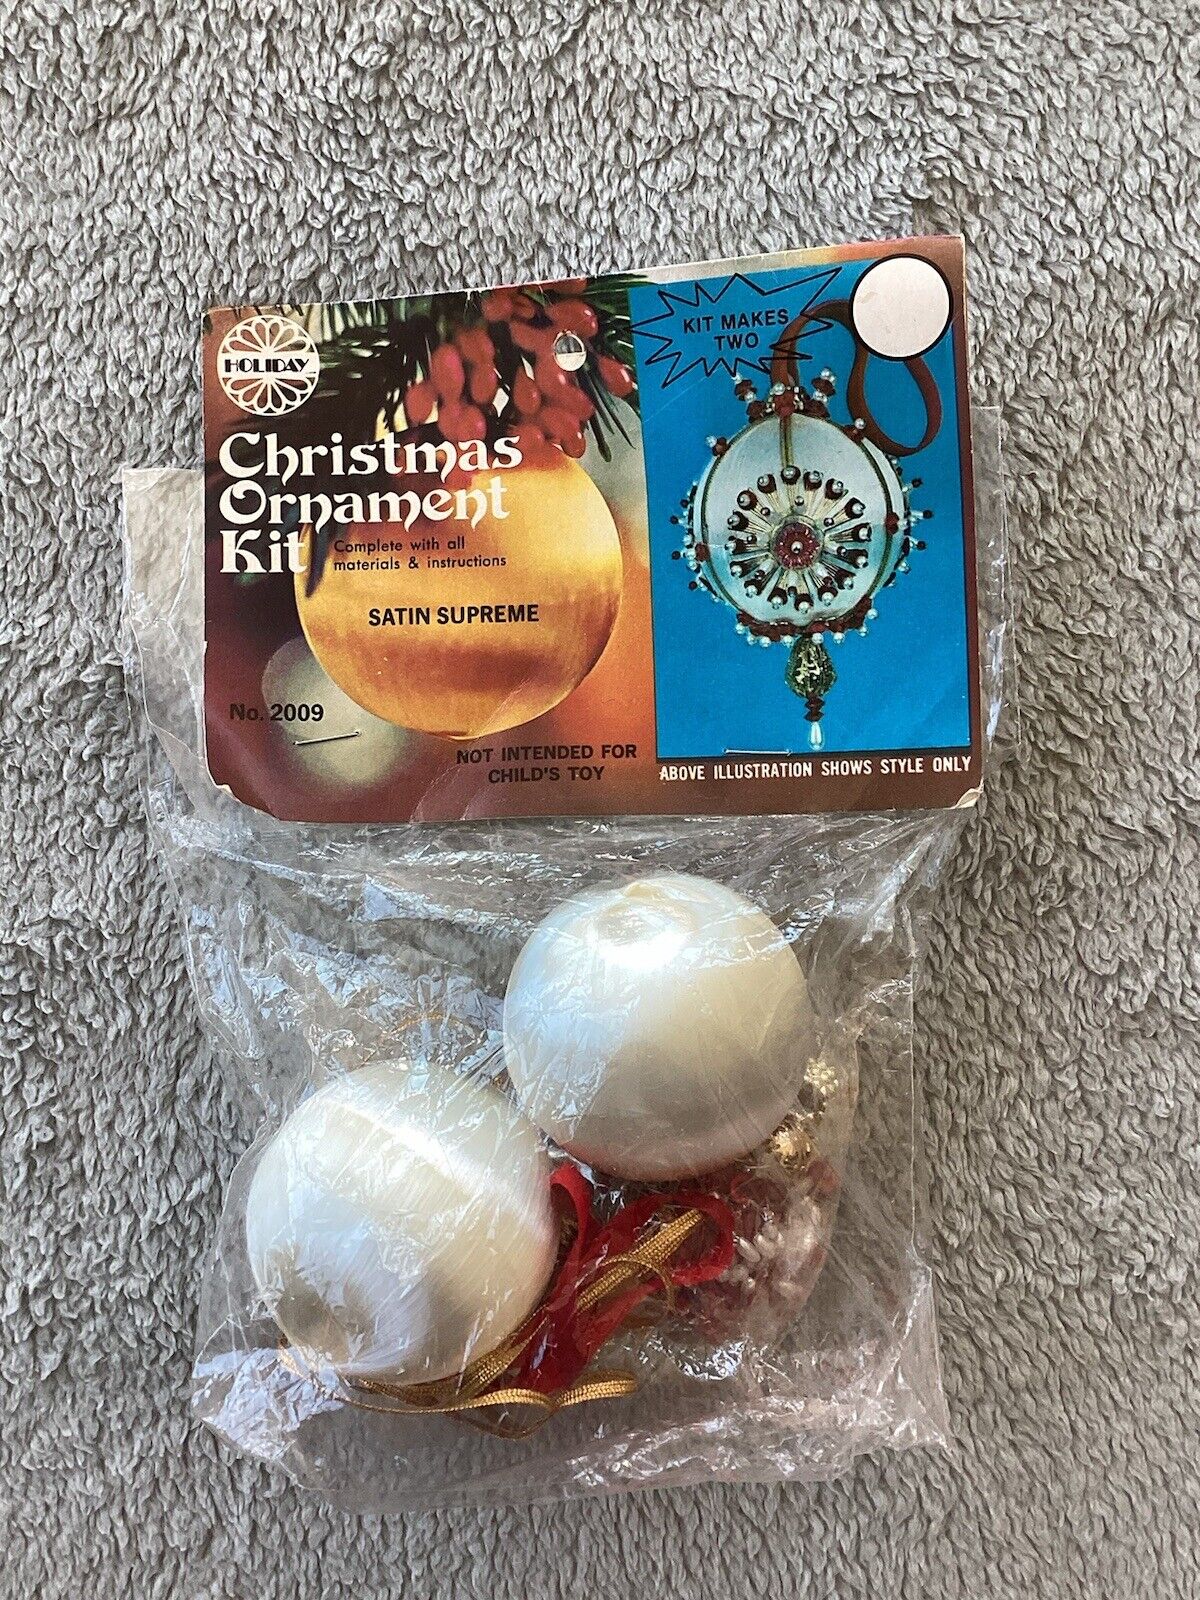 Vintage Walco Christmas Ornament Kit 1977 Satin Supreme New Sealed Makes 2